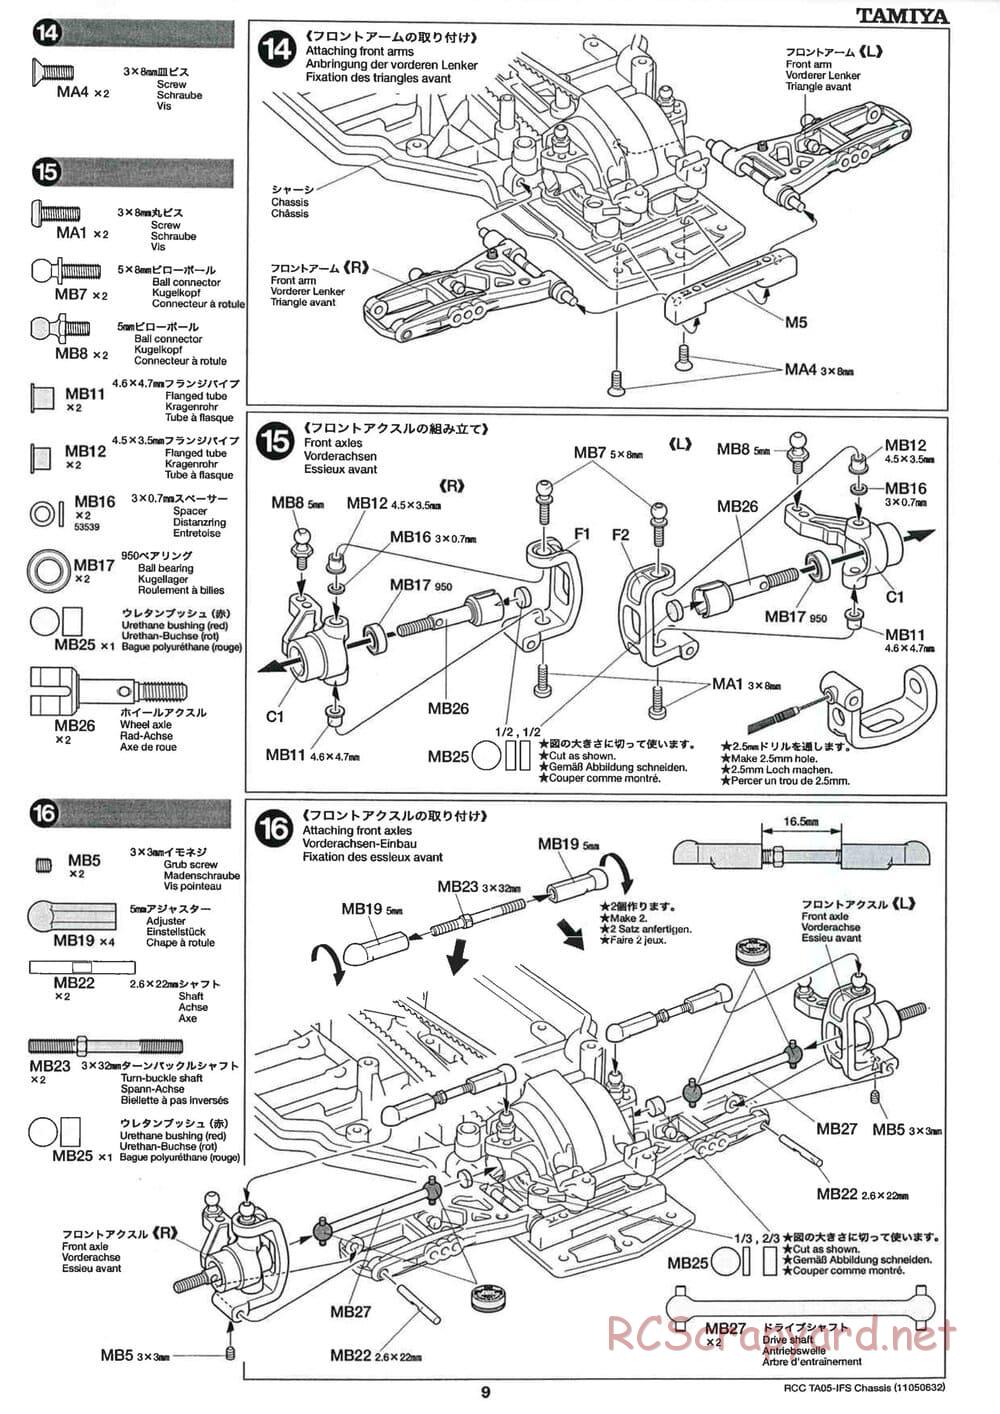 Tamiya - TA05-IFS Chassis - Manual - Page 9